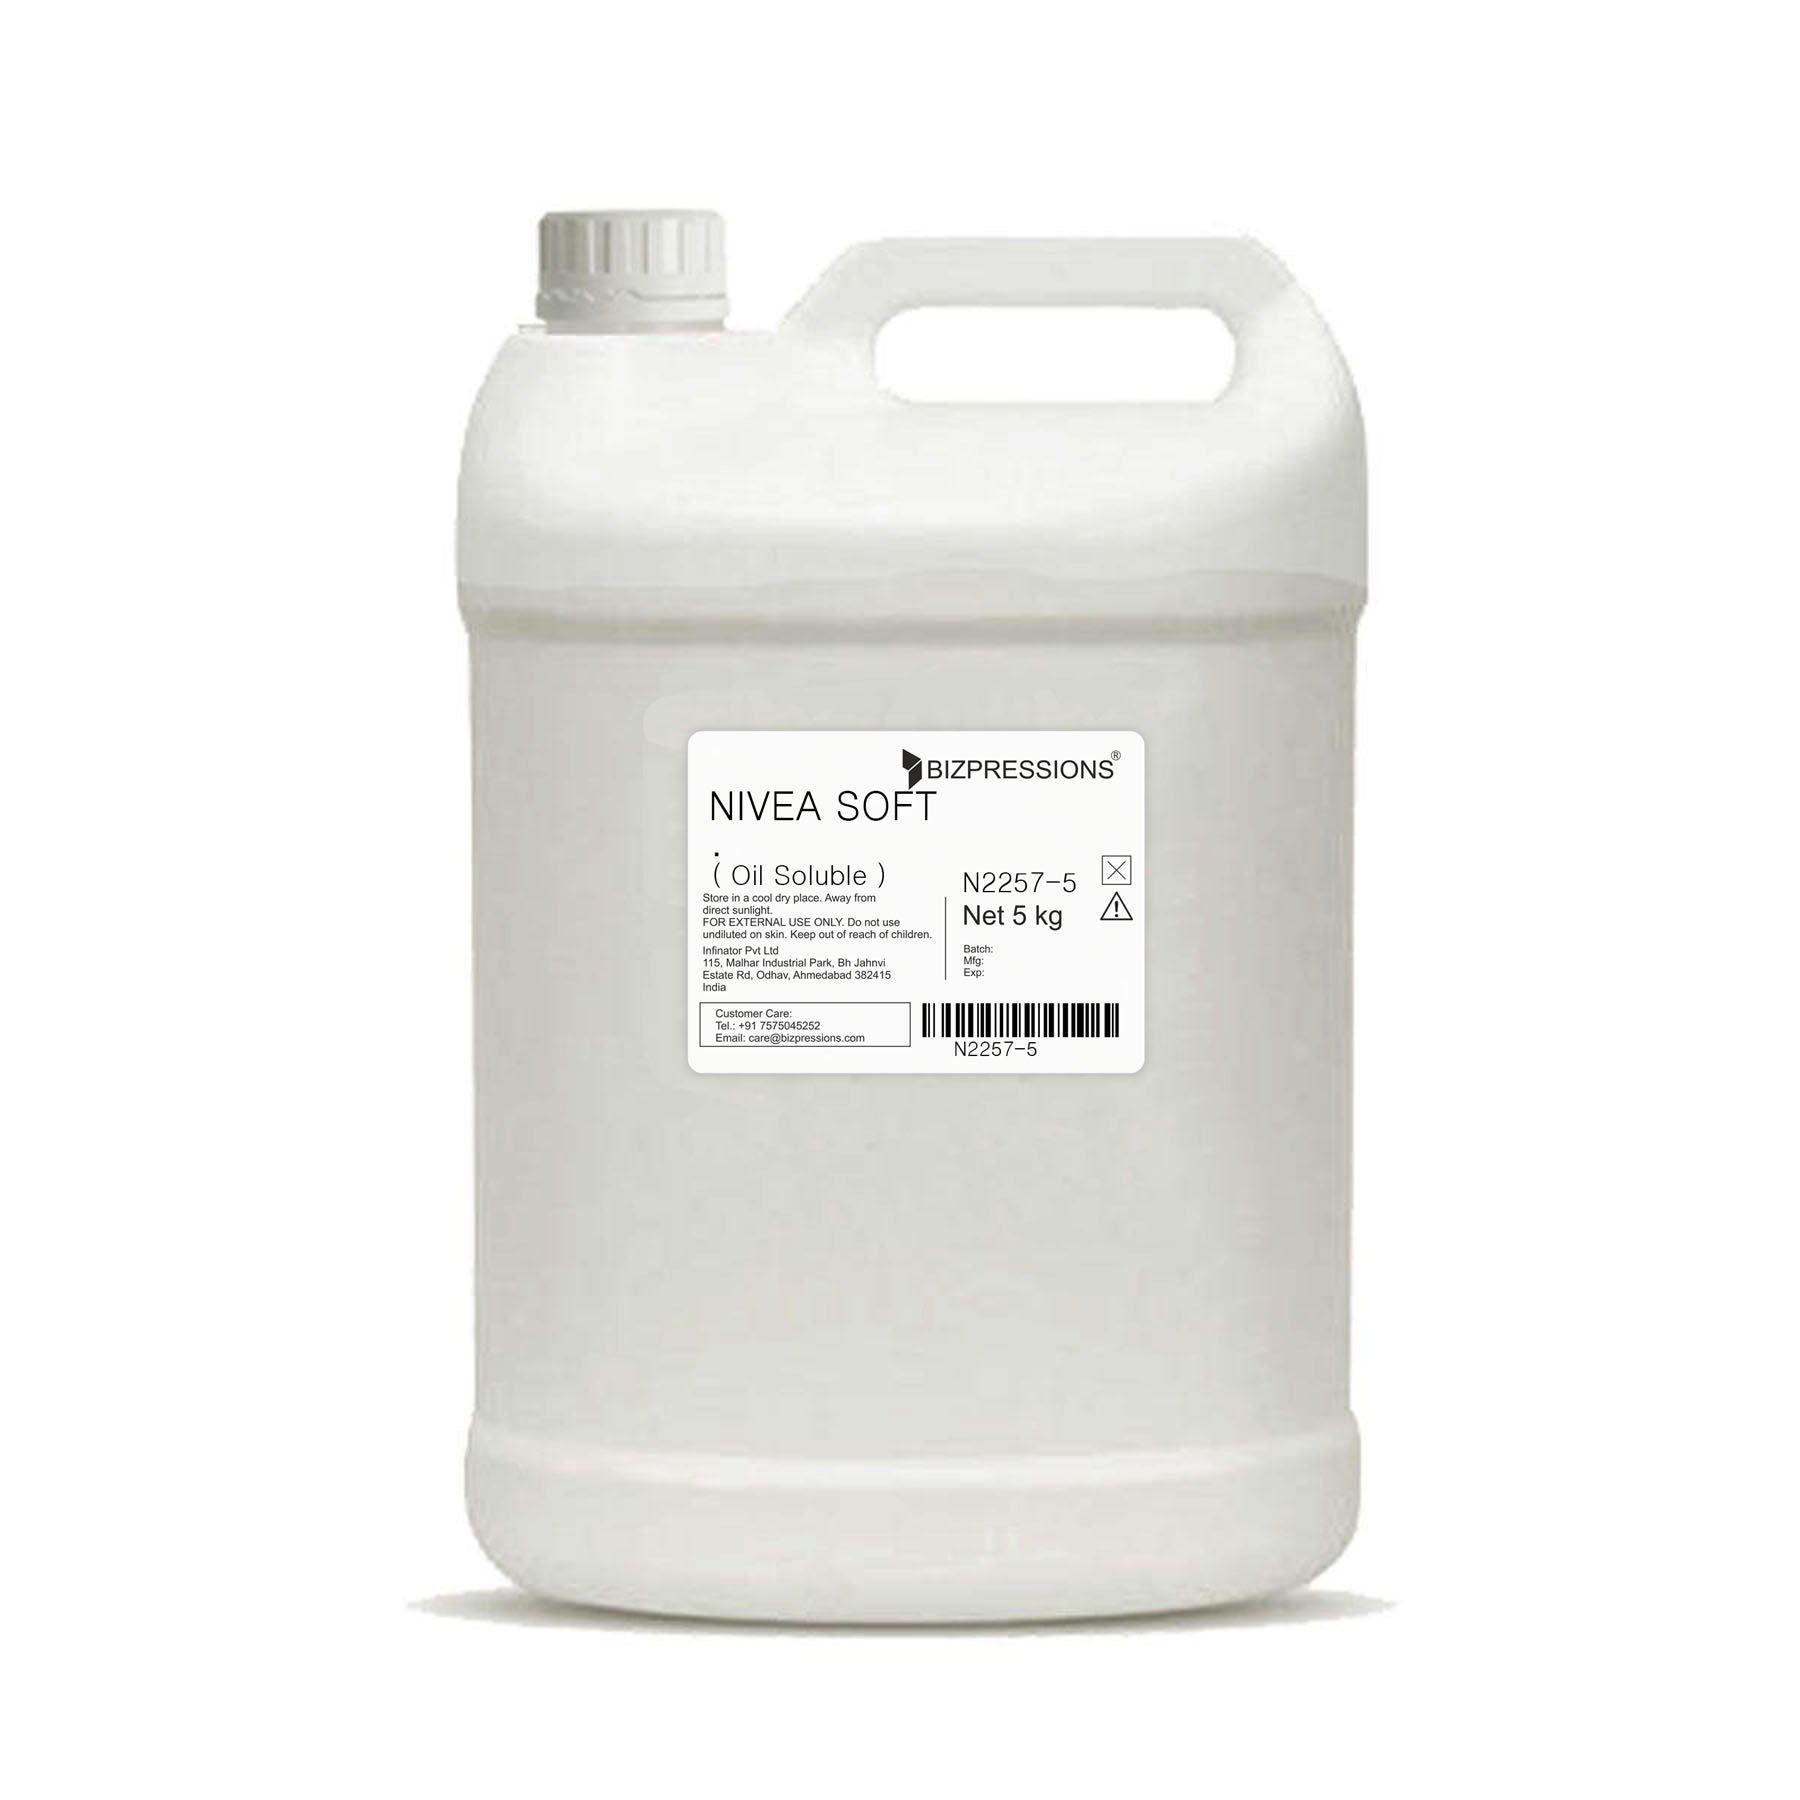 NIVEA SOFT - Fragrance ( Oil Soluble ) - 5 kg